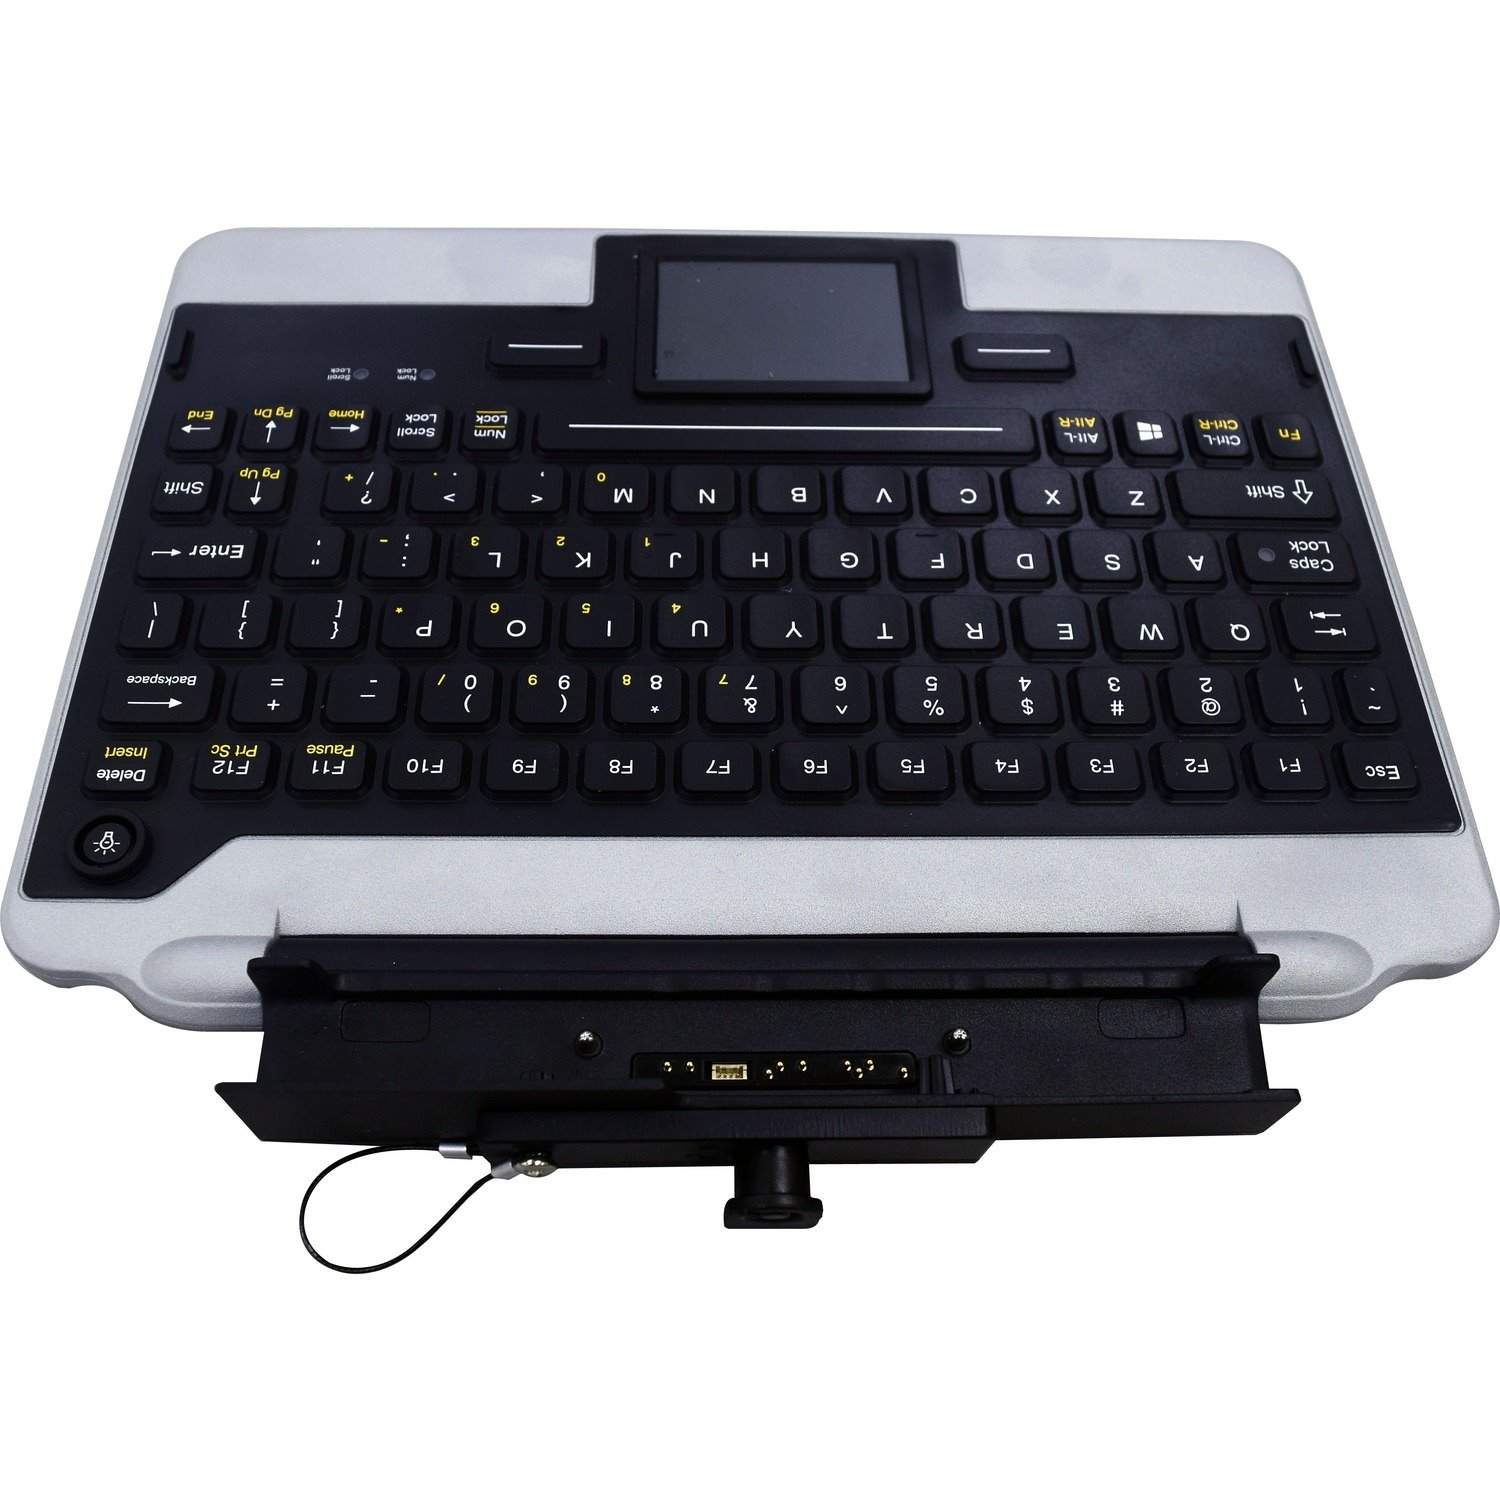 iKey IK-PAN-FZG1-C1-V5 Keyboard - Docking Connectivity - USB 2.0 Interface - TouchPad - Black, Silver